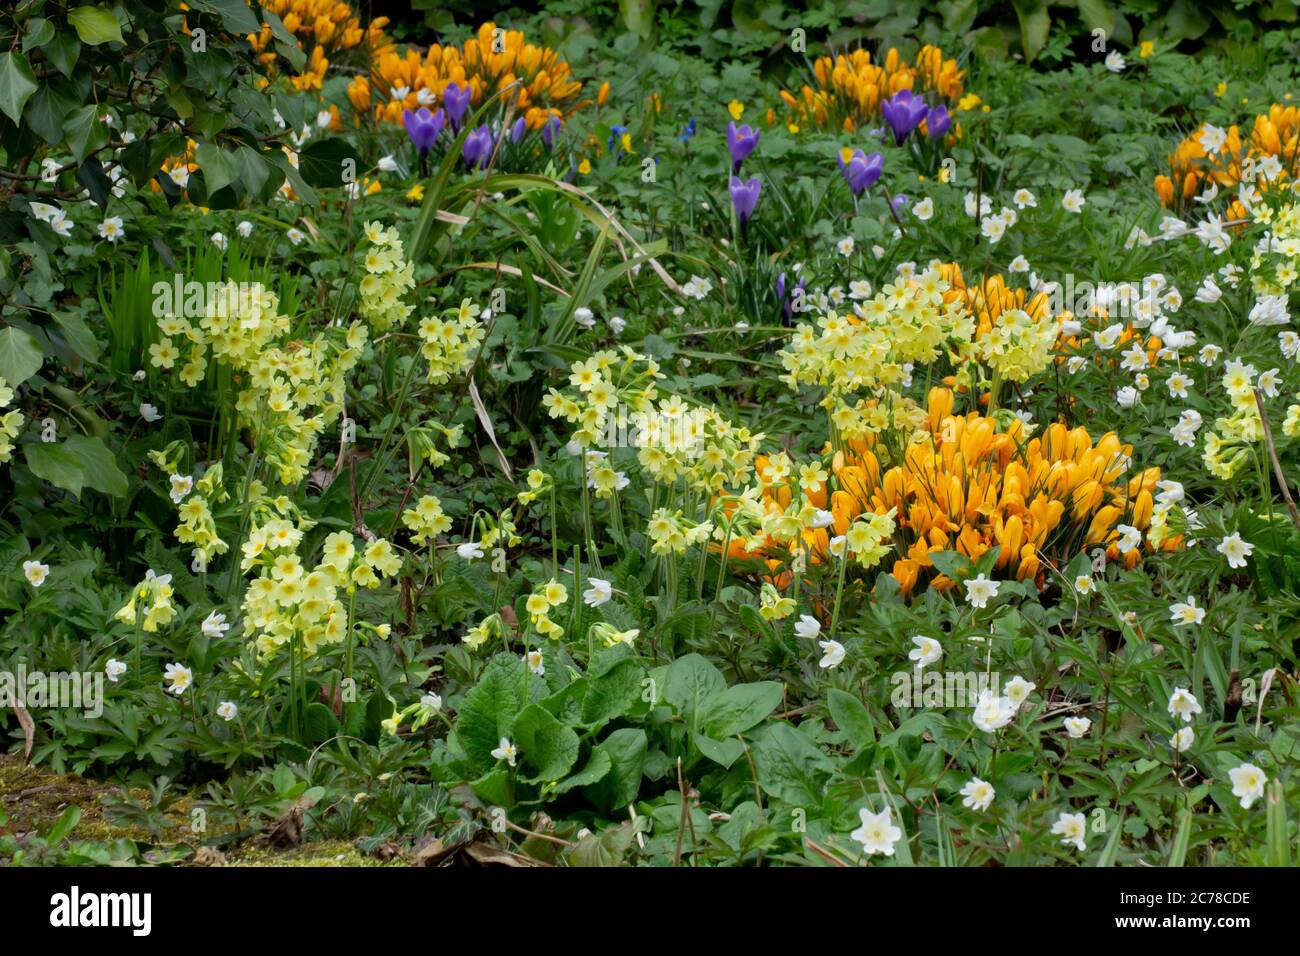 Colorful flowerbed with white wood anemones, Yellow and purple saffron crocus and primrose , Anemone nemorosa, Crocus vernus and Primula veris Stock Photo